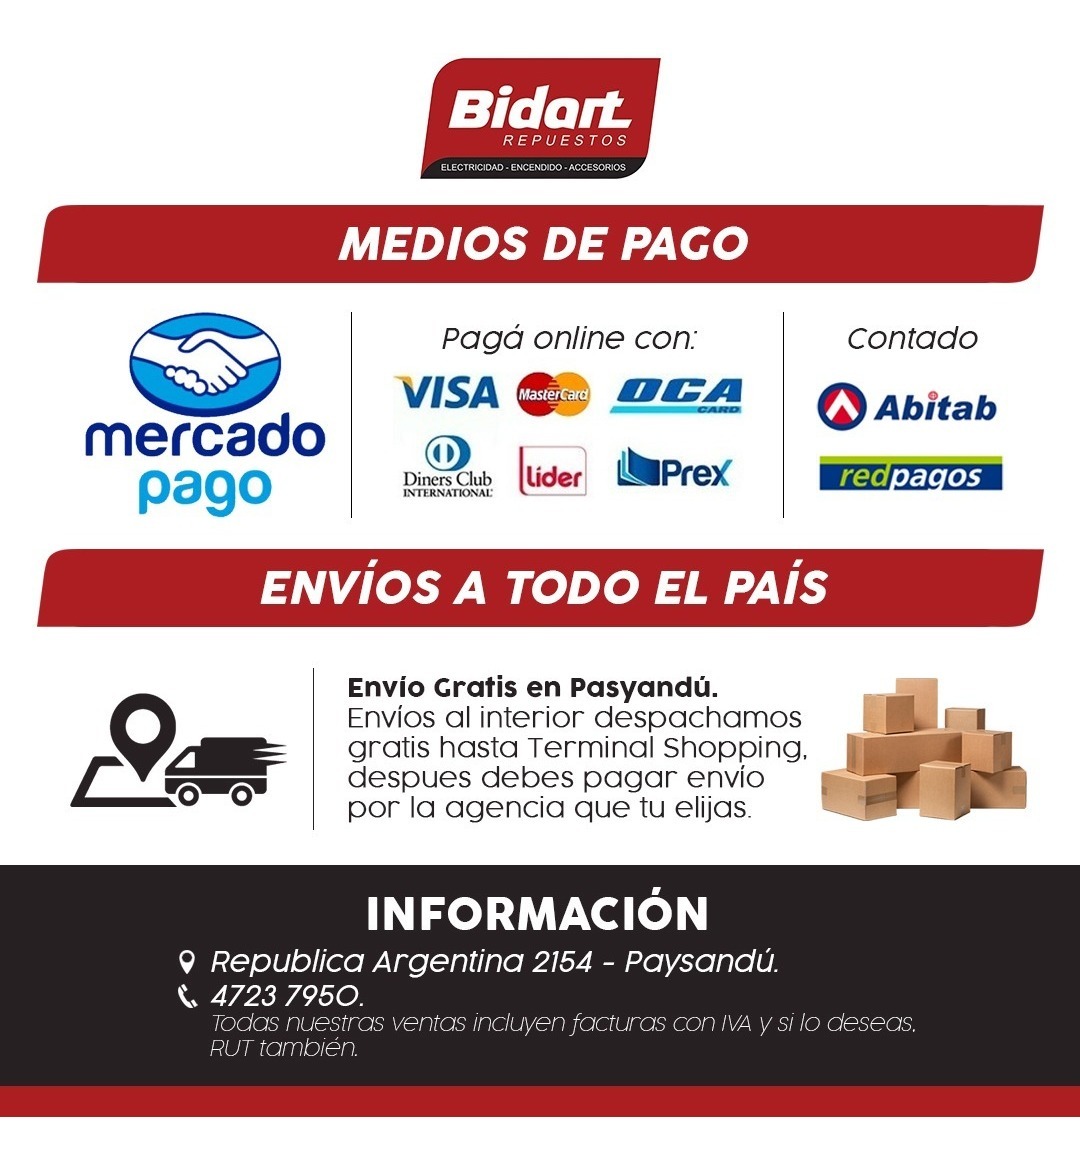 Caminero Redondo 10mm Largo Alcance Bidart 160 00 En Mercado Libre - 3x1 promo kit imprimible roblox candy bar deco banderin 89